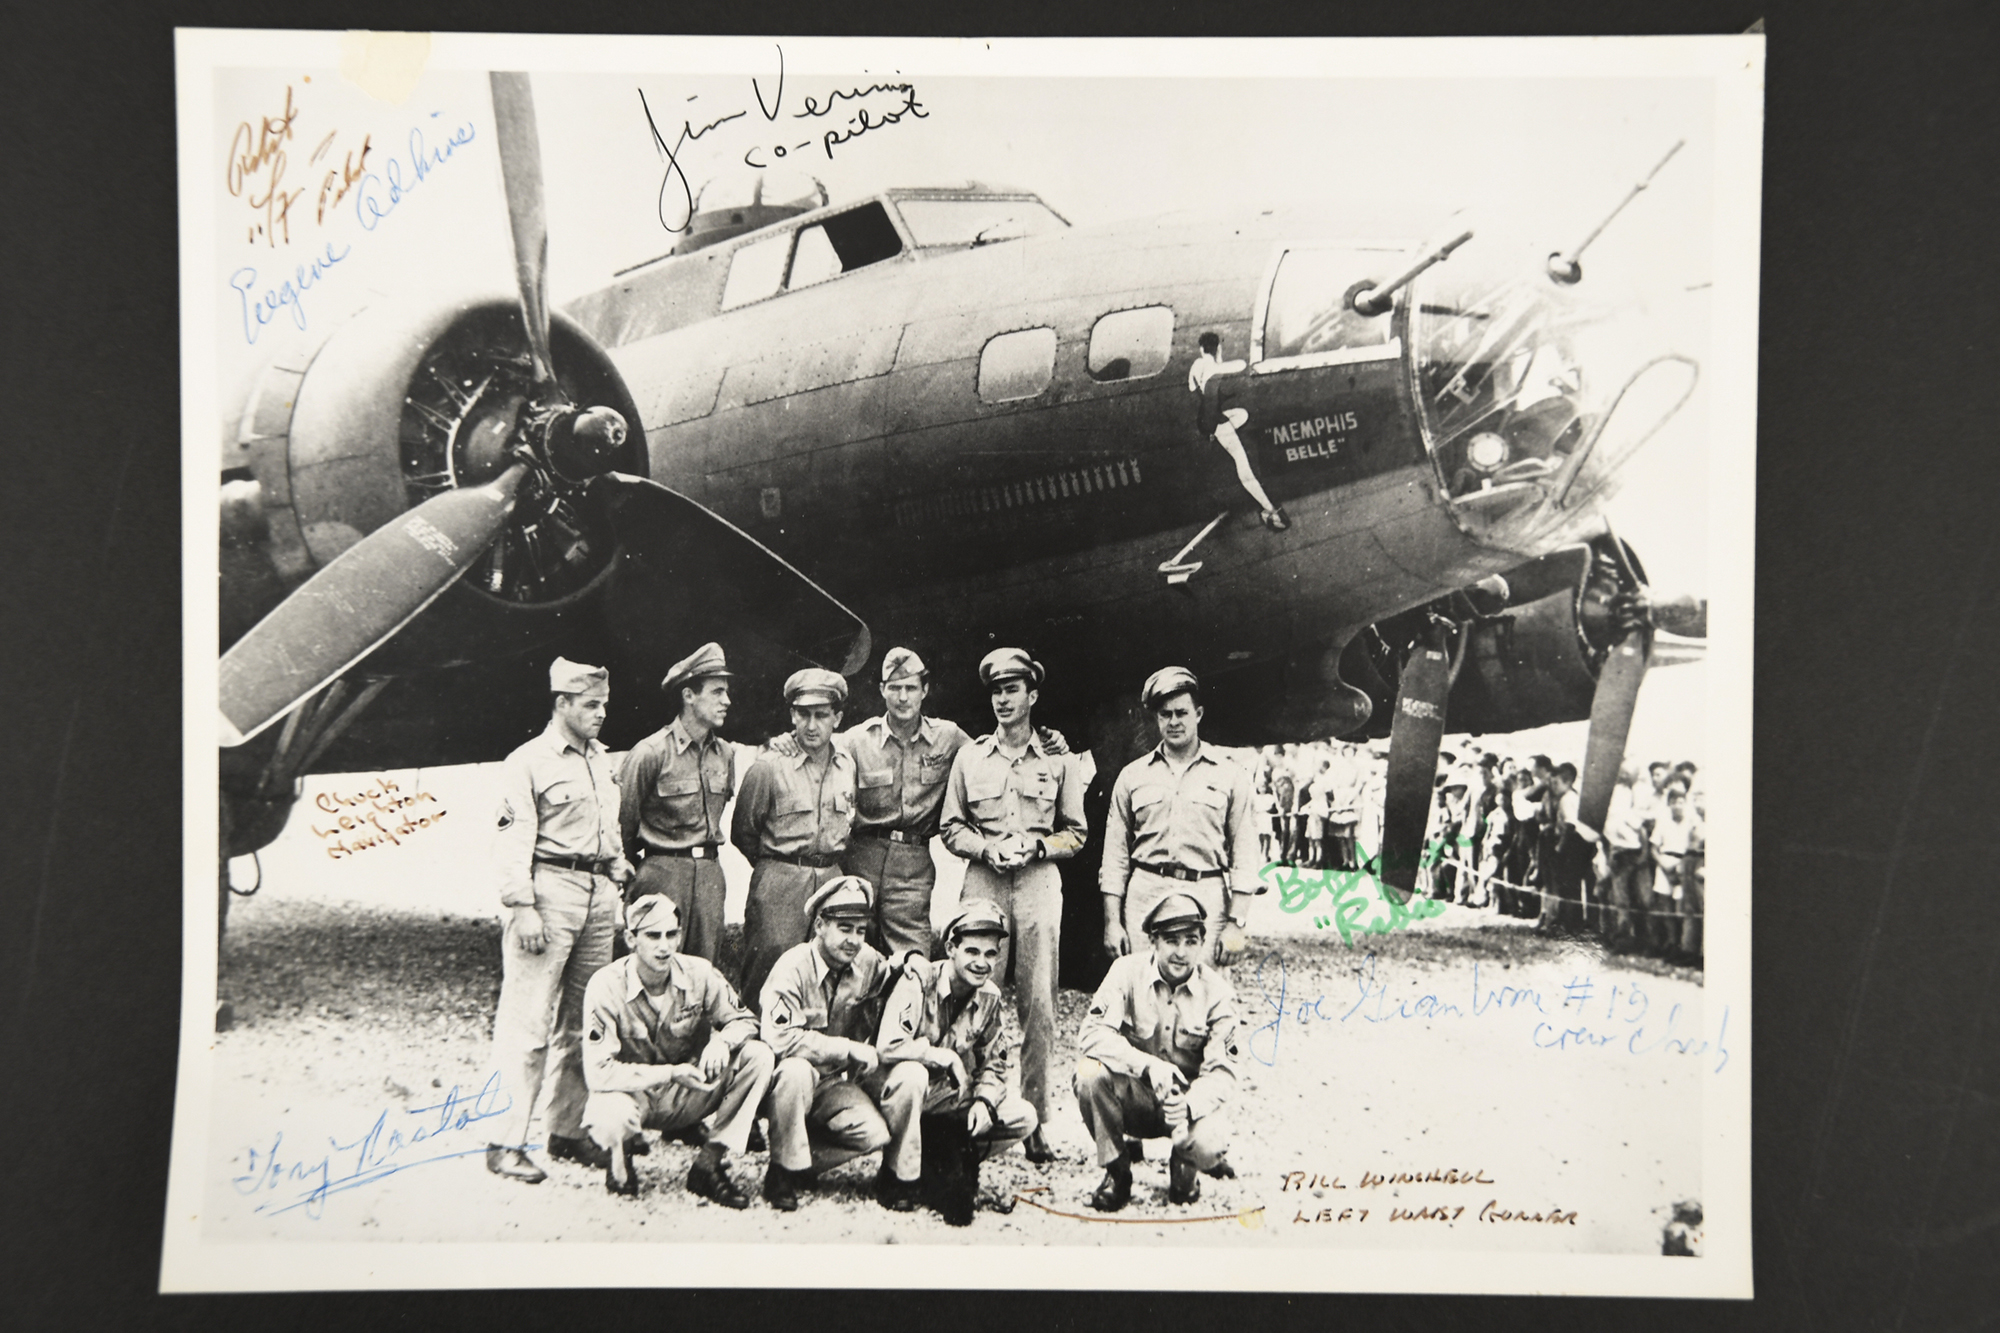 Memphis Belle Original Signatures of 8 crew members.